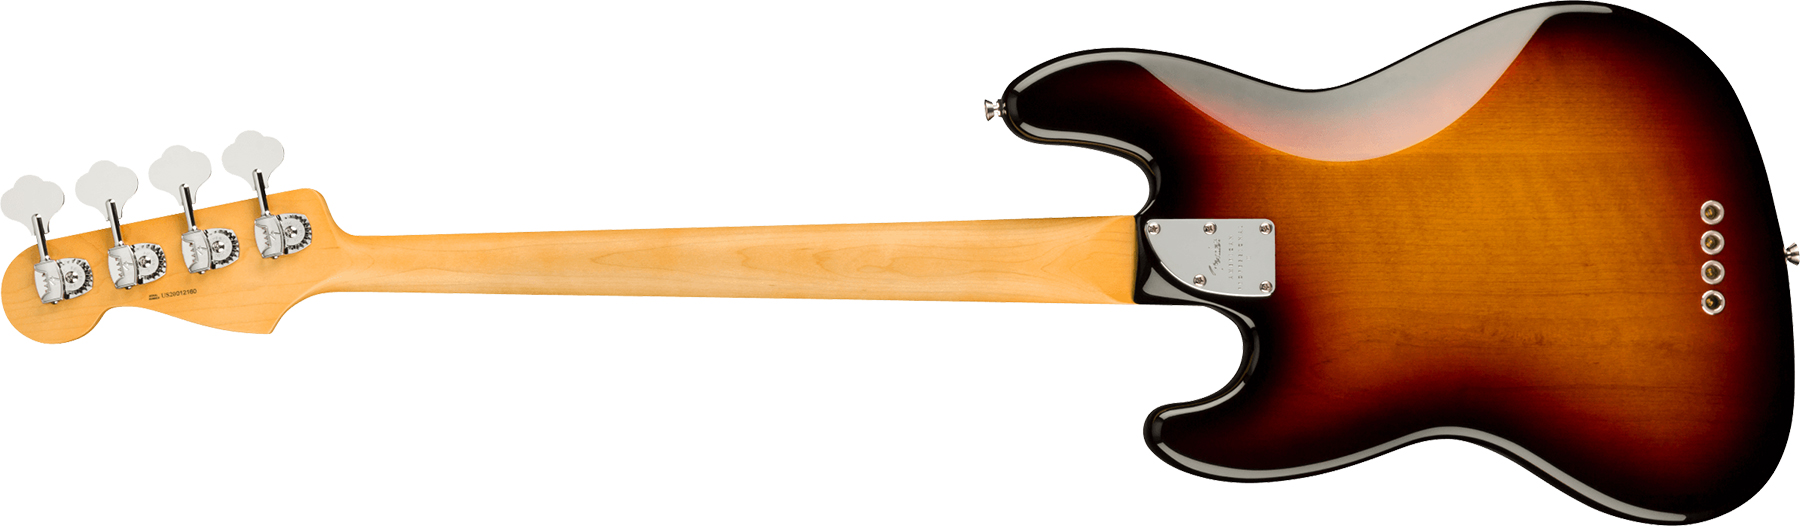 Fender Jazz Bass American Professional Ii Usa Rw - 3-color Sunburst - Basse Électrique Solid Body - Variation 1